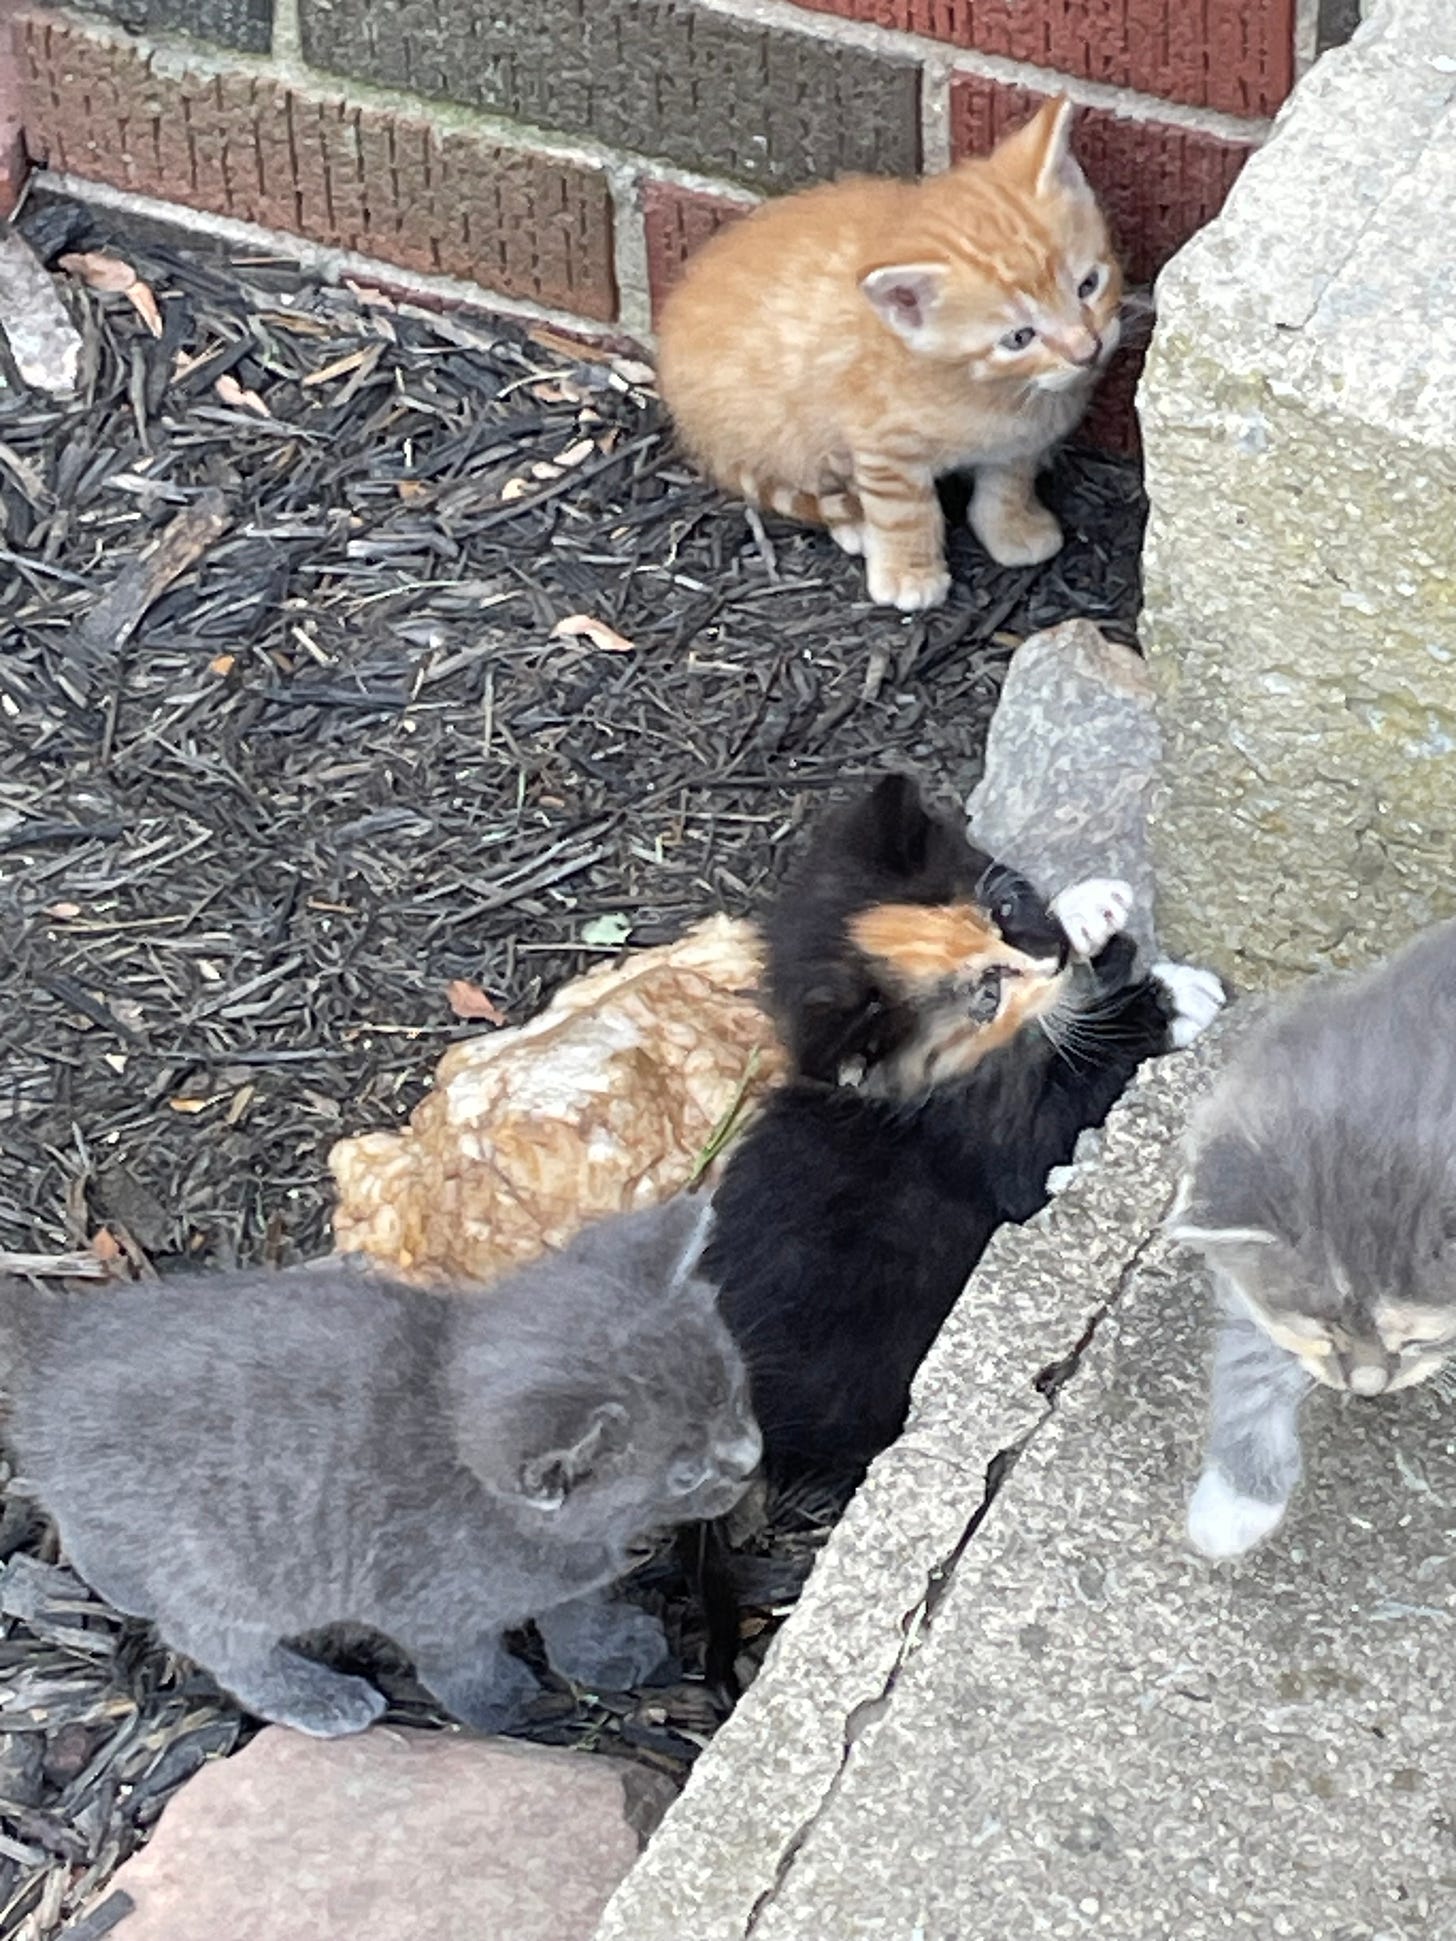 Four tiny kittens